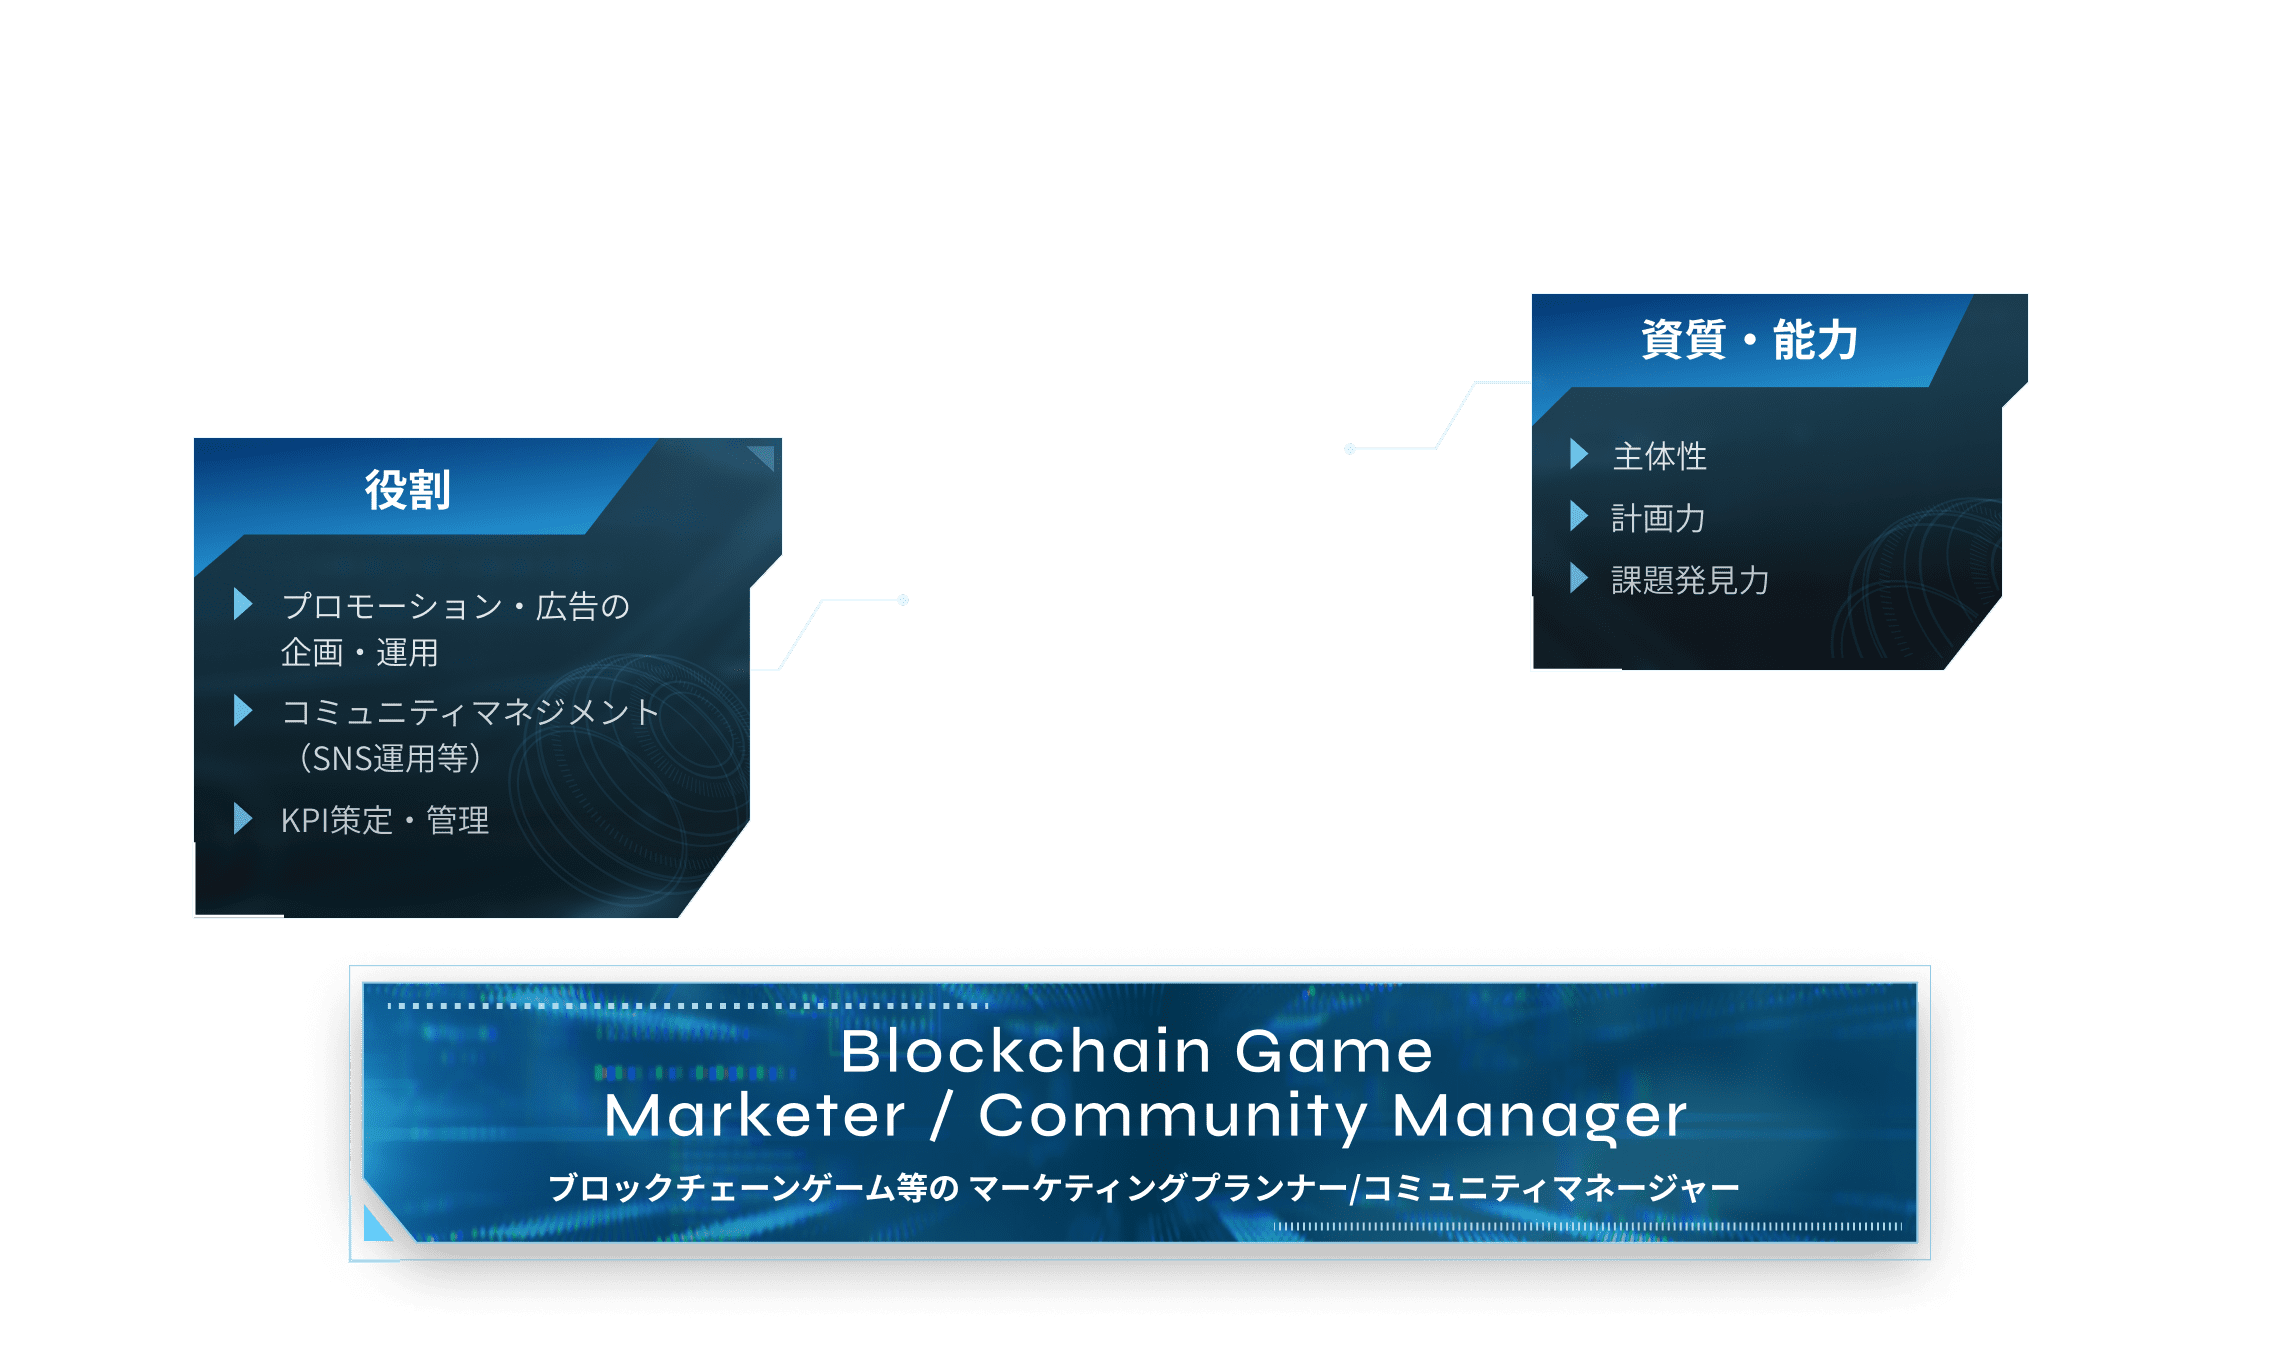 Blockchain Game Marketer / Community Manager ブロックチェーンゲーム等の マーケティングプランナー/コミュ ニティマネージャー